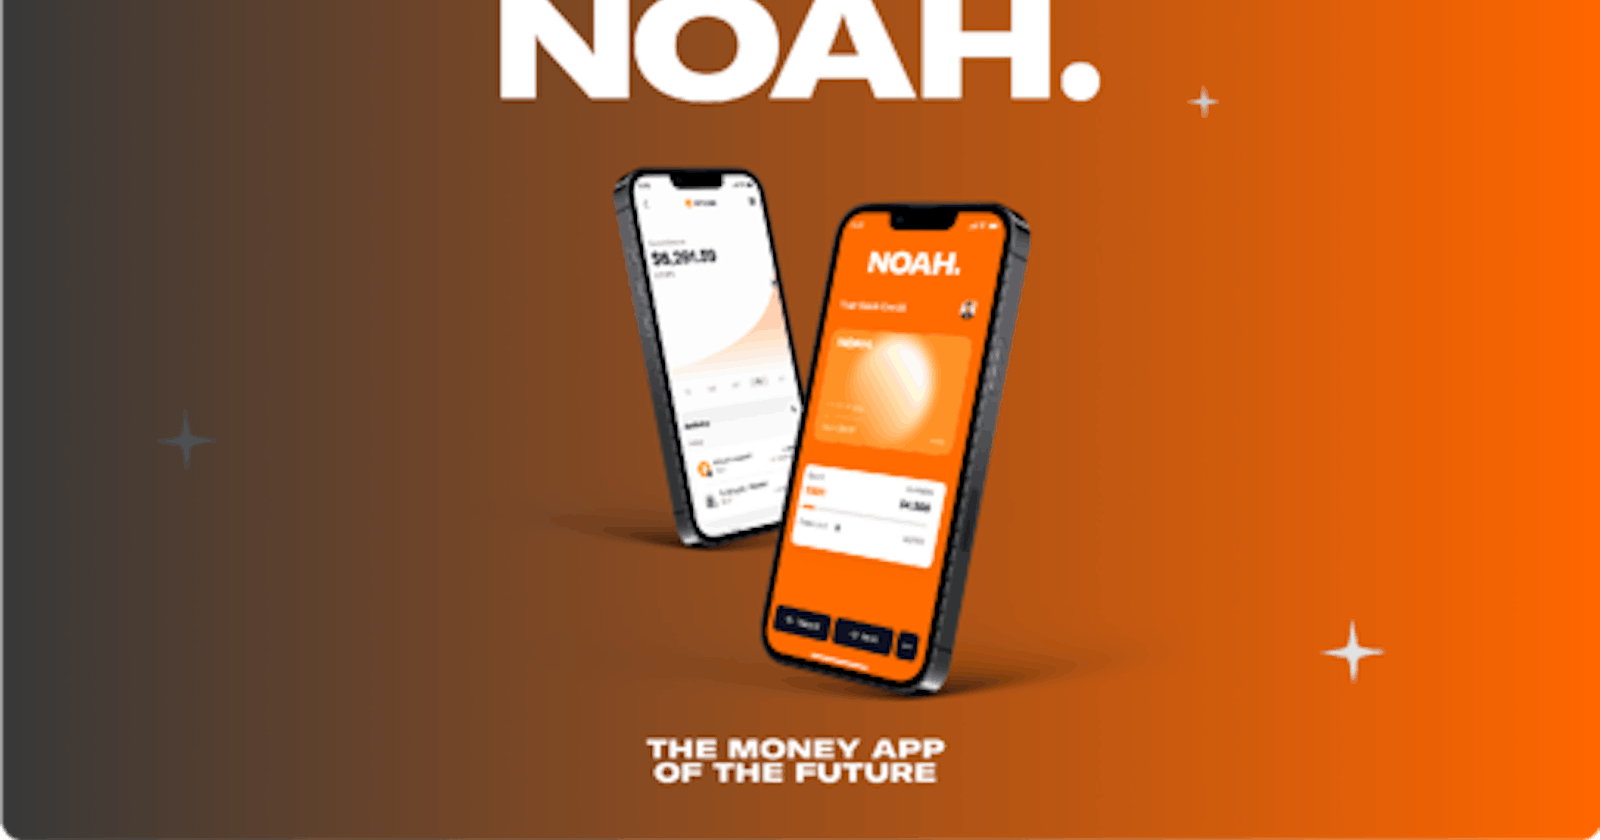 You don’t need a bank, you need Noah